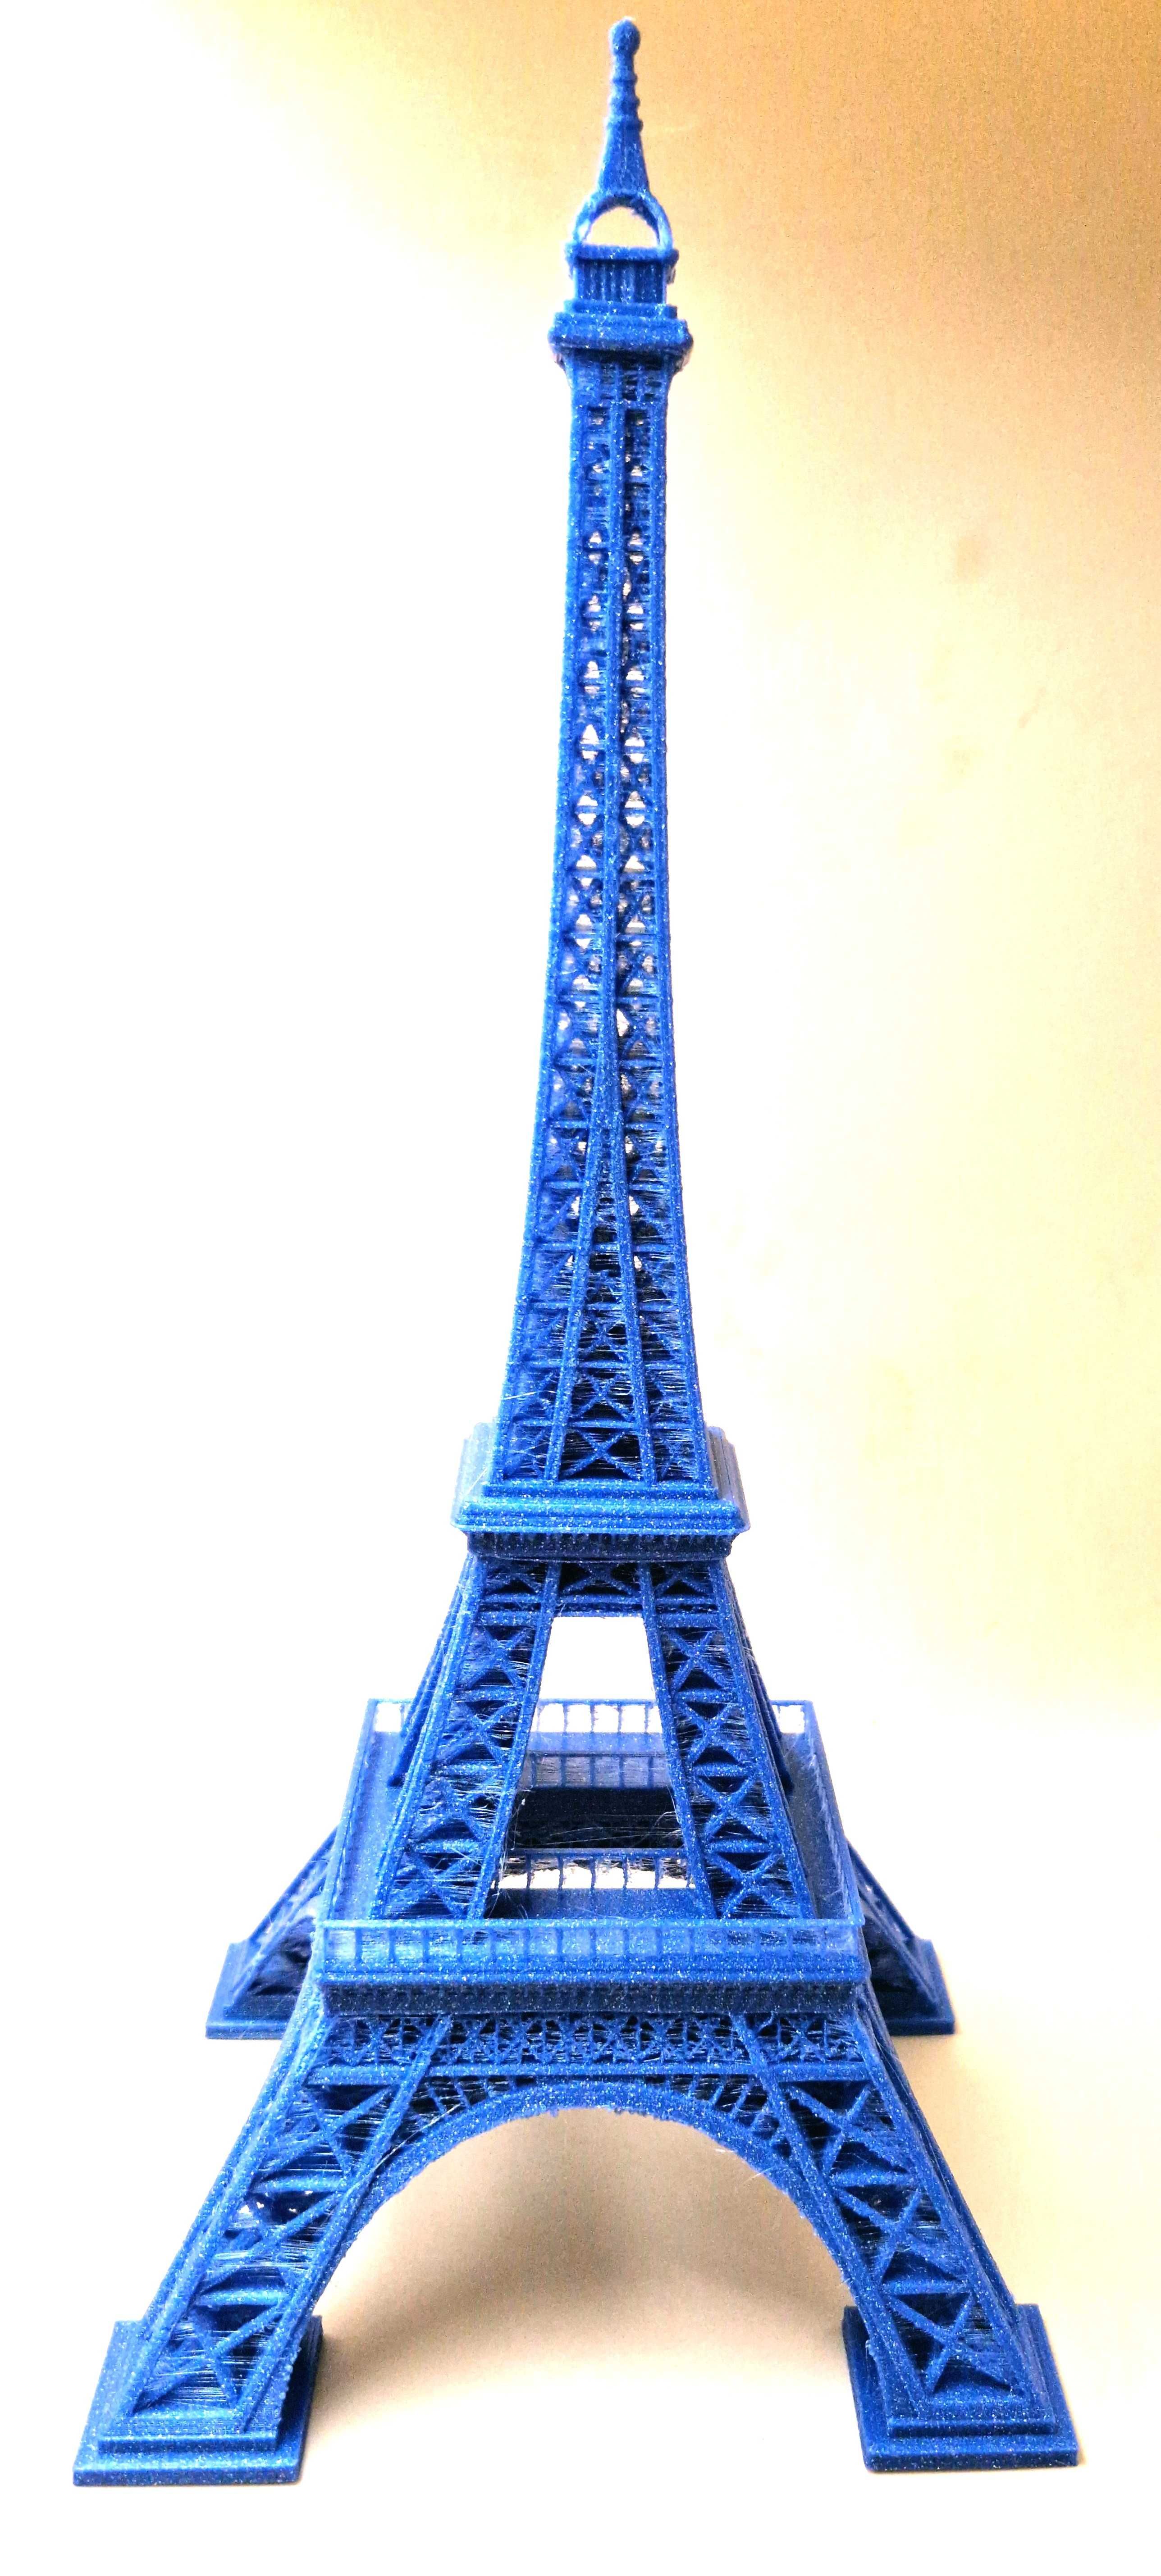 Macheta Turn Eiffel 1:1000 și Suportul Masă Levitabilă Tensegrity!